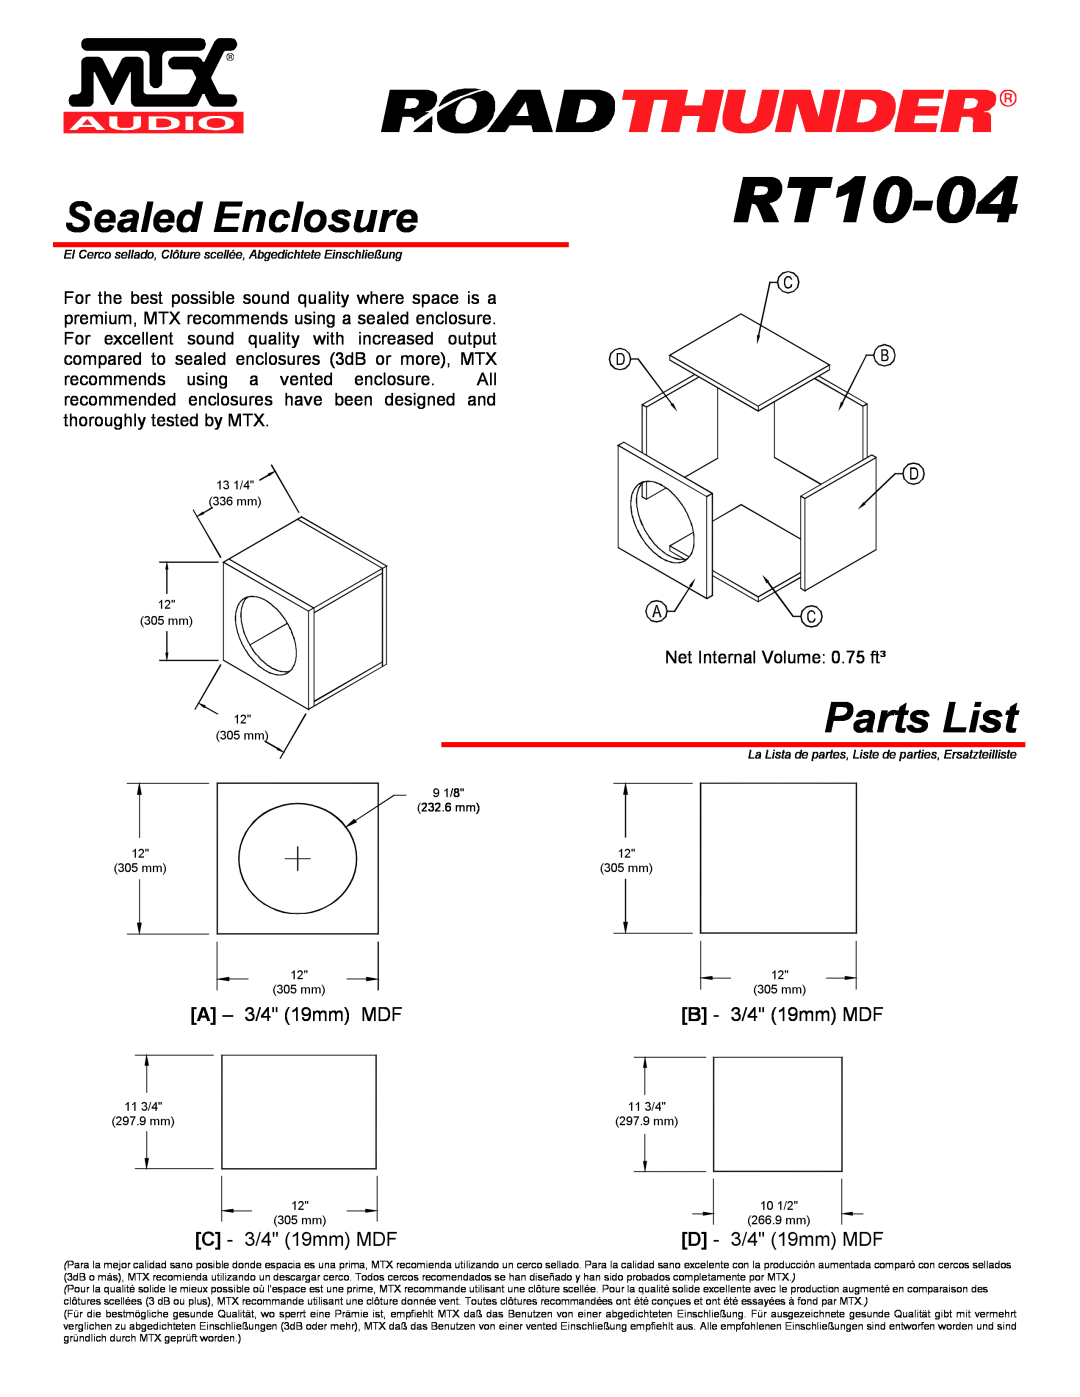 MTX Audio RT10-04 Sealed Enclosure, Parts List, A - 3/4 19mm MDF, B - 3/4 19mm MDF, C - 3/4 19mm MDF, D - 3/4 19mm MDF 